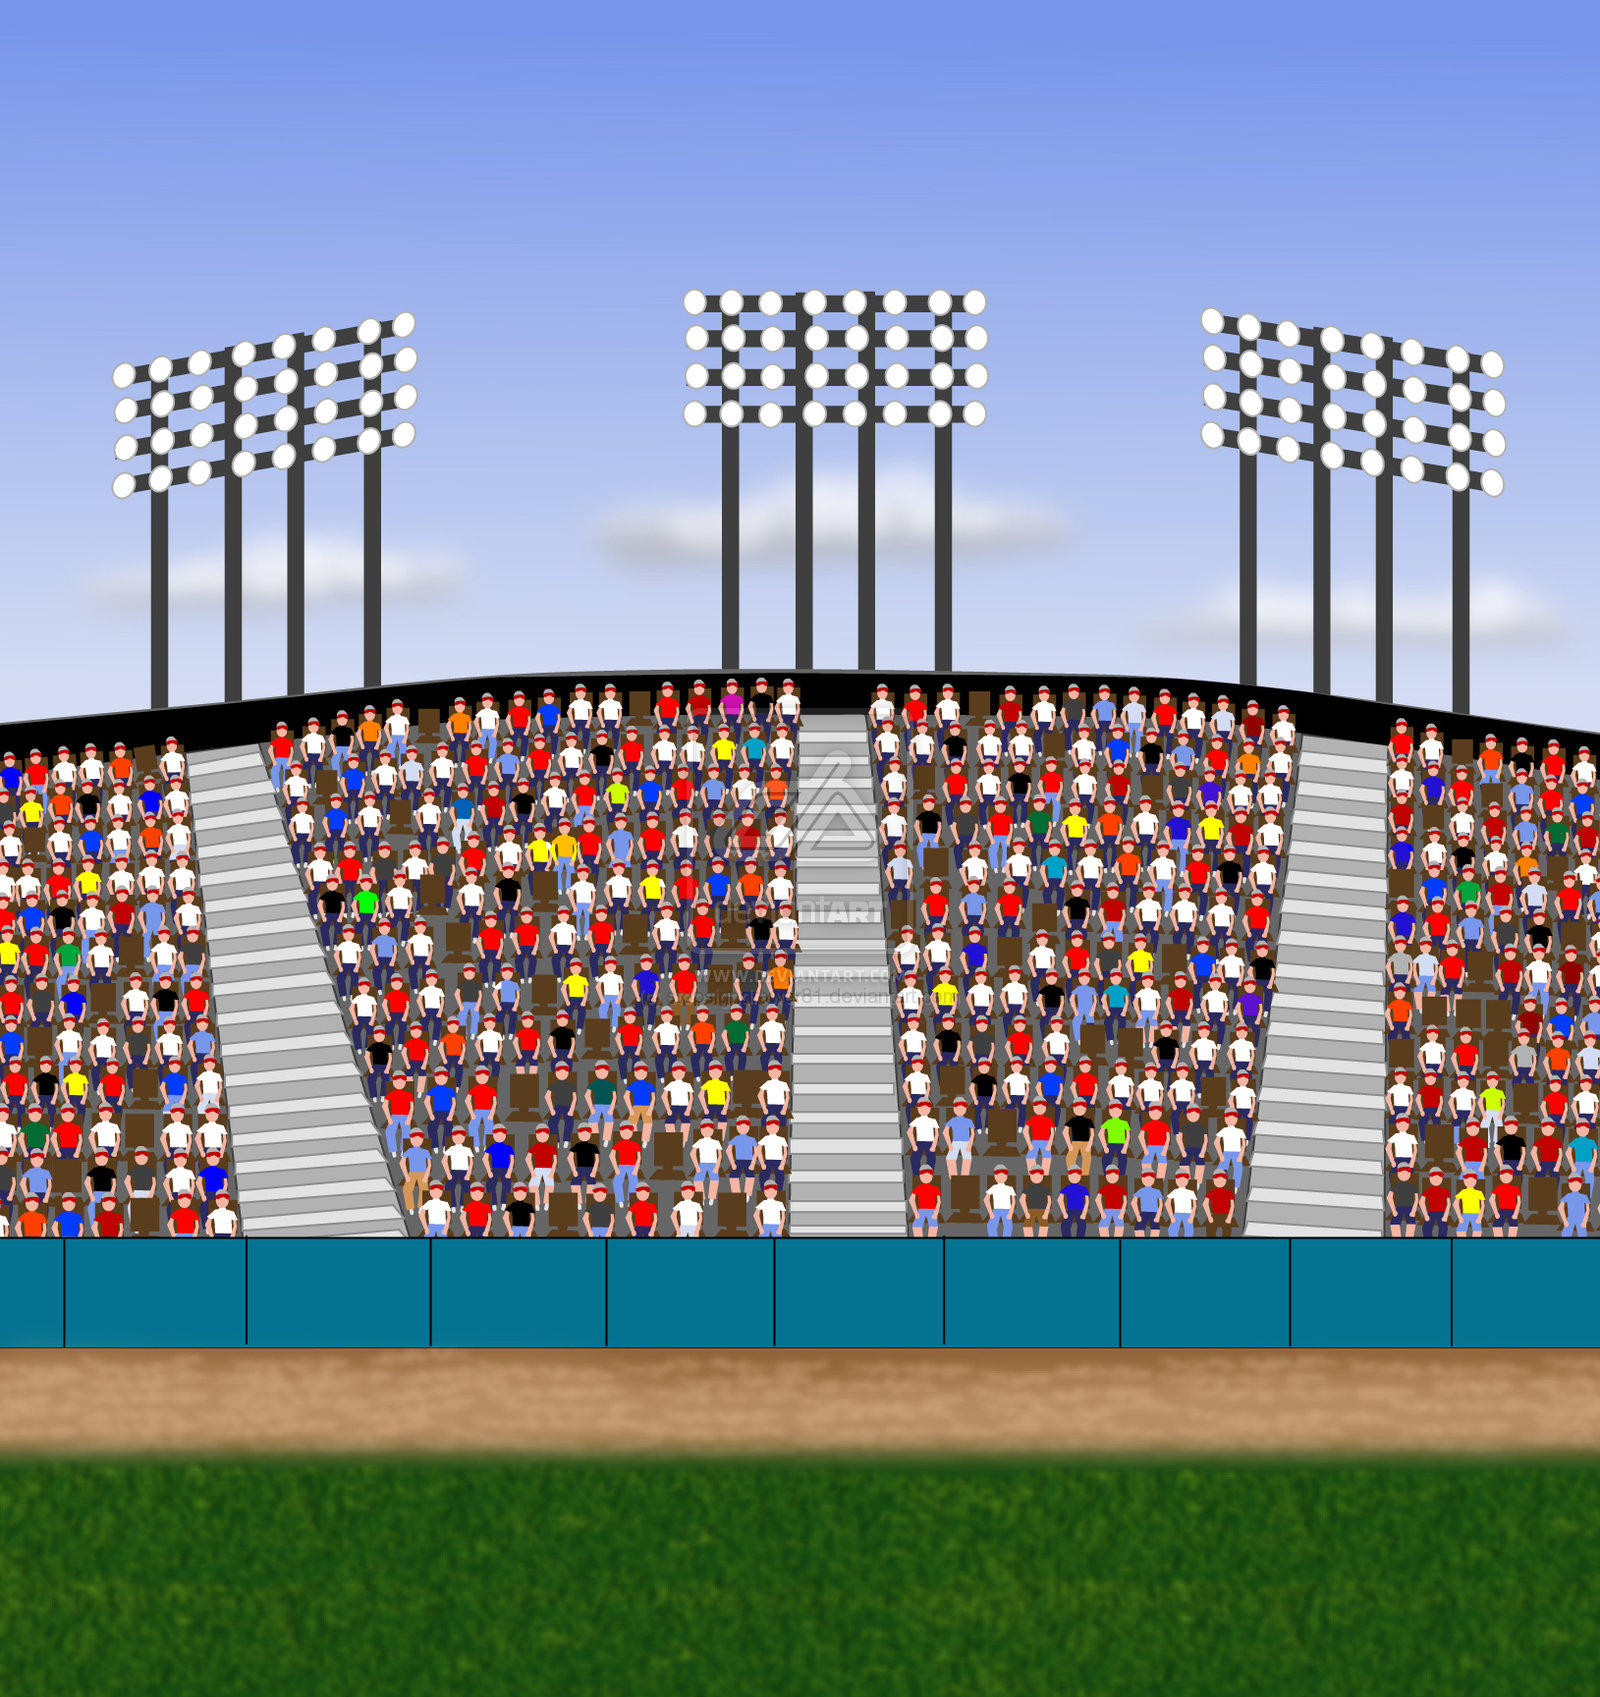 Baseball Stadium Crowd Baseball Stadium By